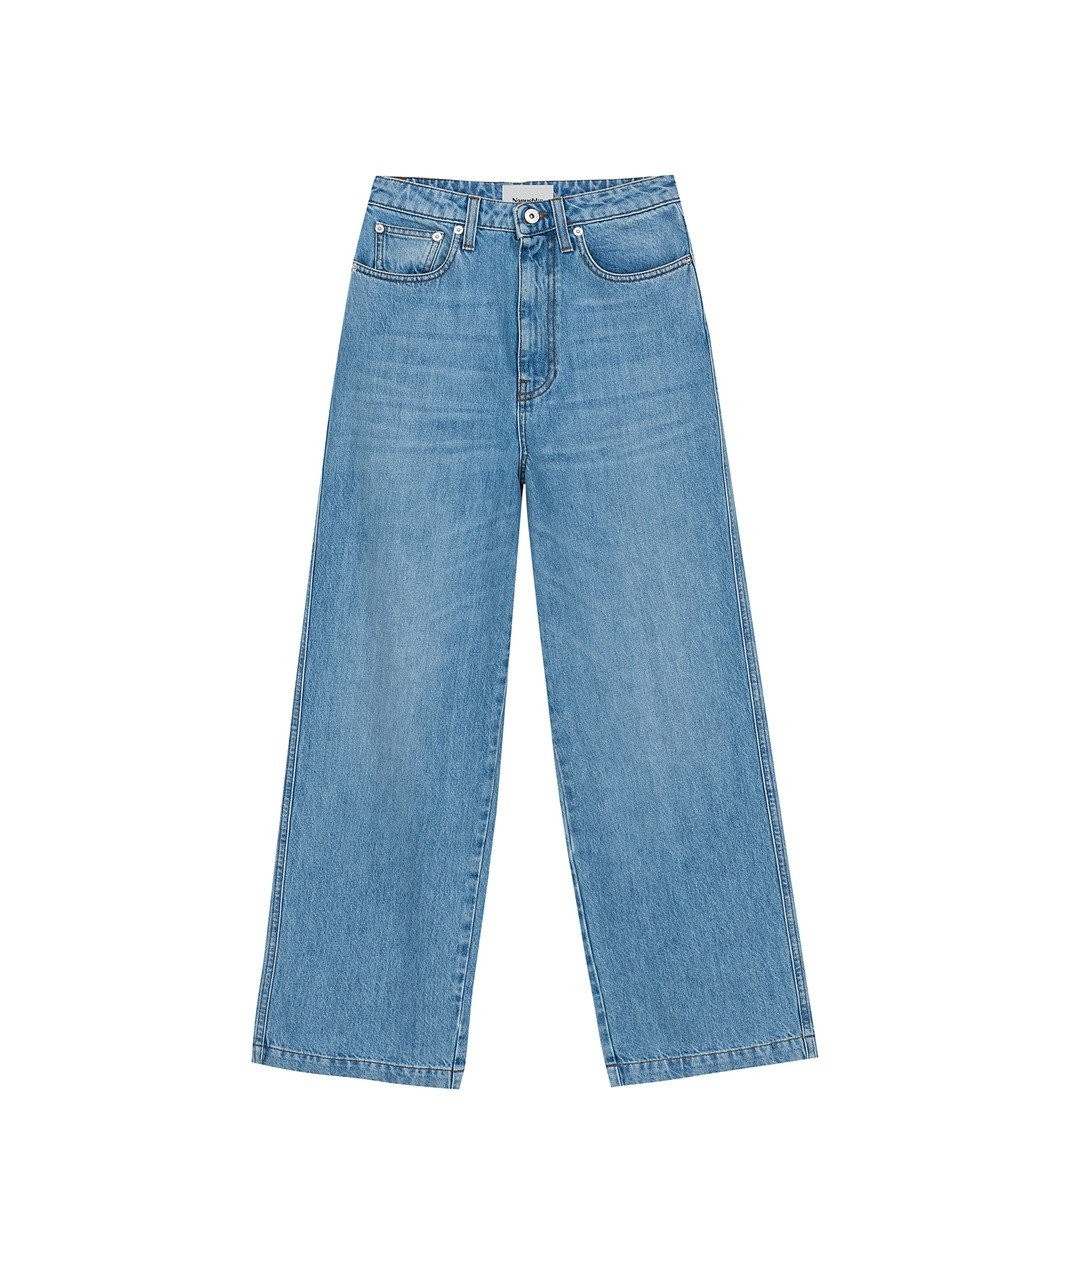 nanushka-jane-straight-leg-jeans-light-blue-e6f9804a914c839e5e8b91825a6b.jpg